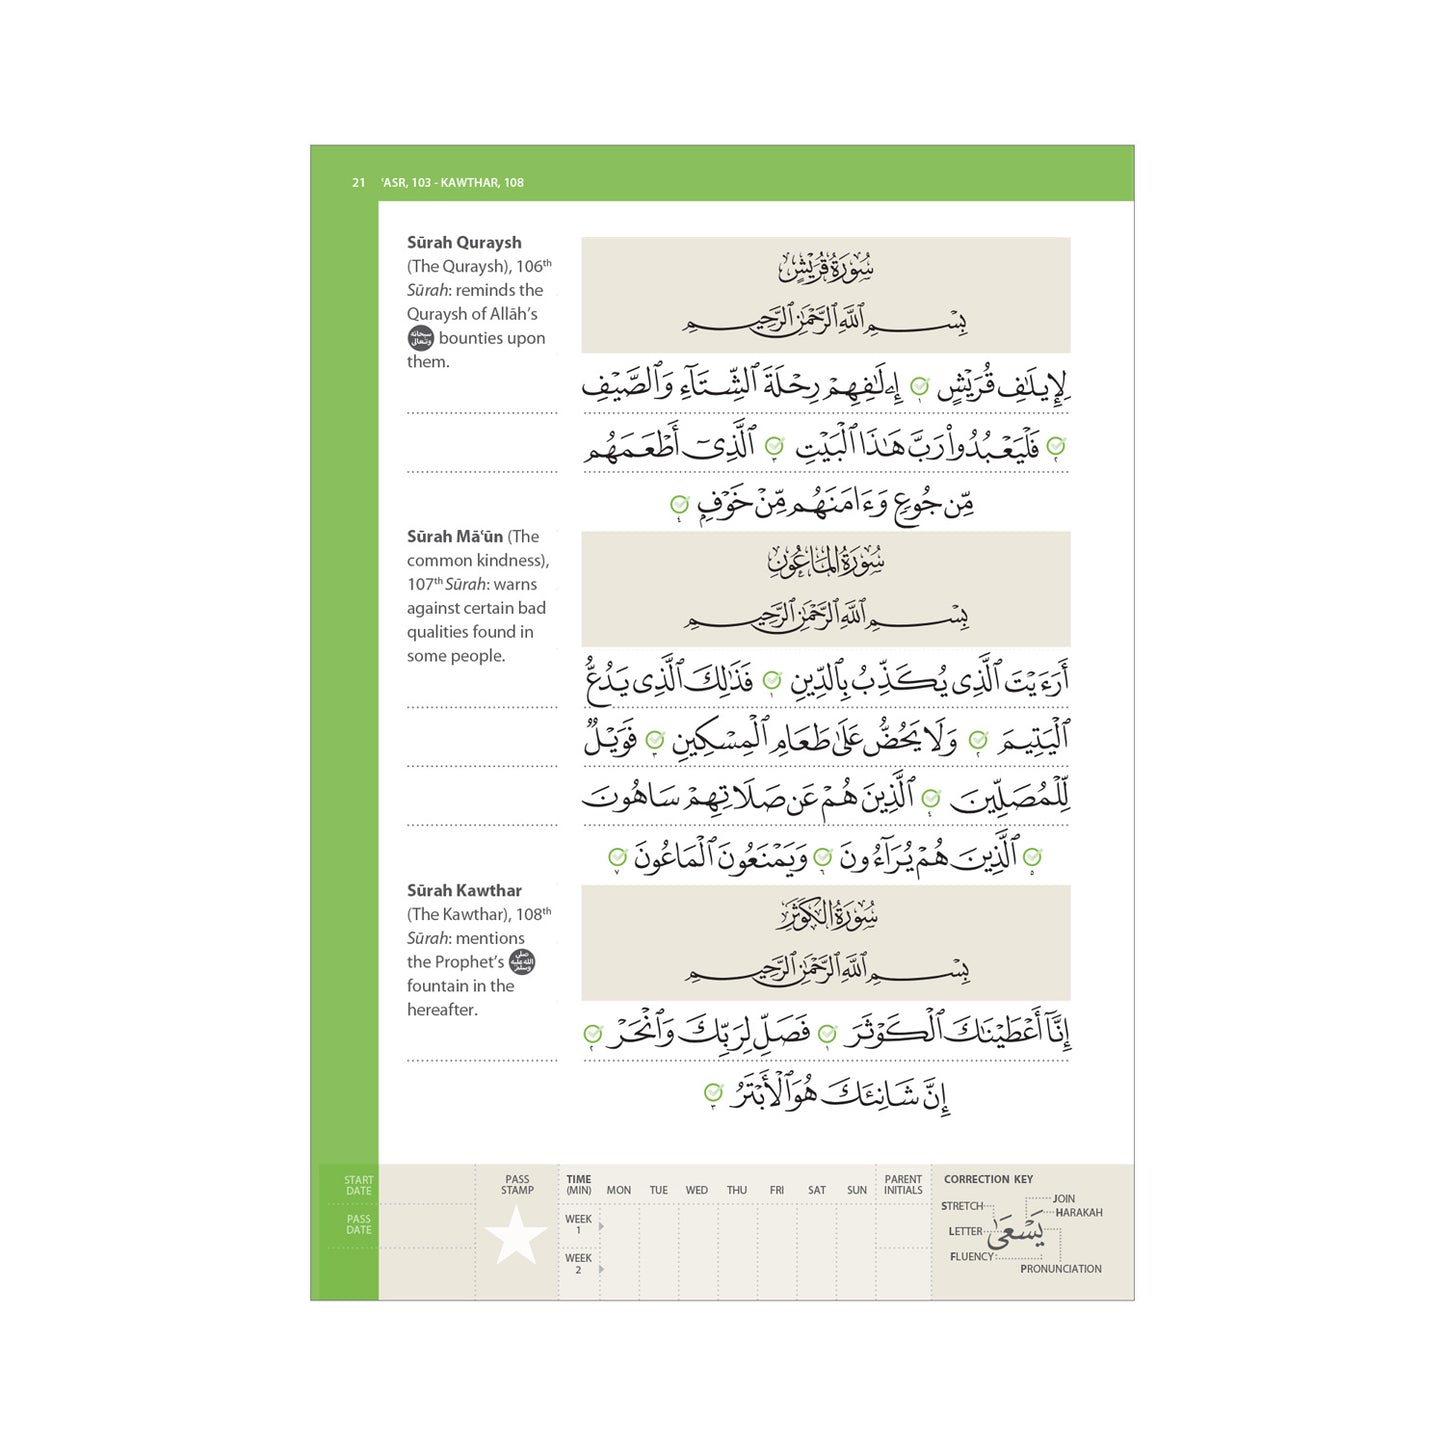 Juz’ ‘Amma – Learn to Read Series by Safar (Madinah / 15 Line Script)